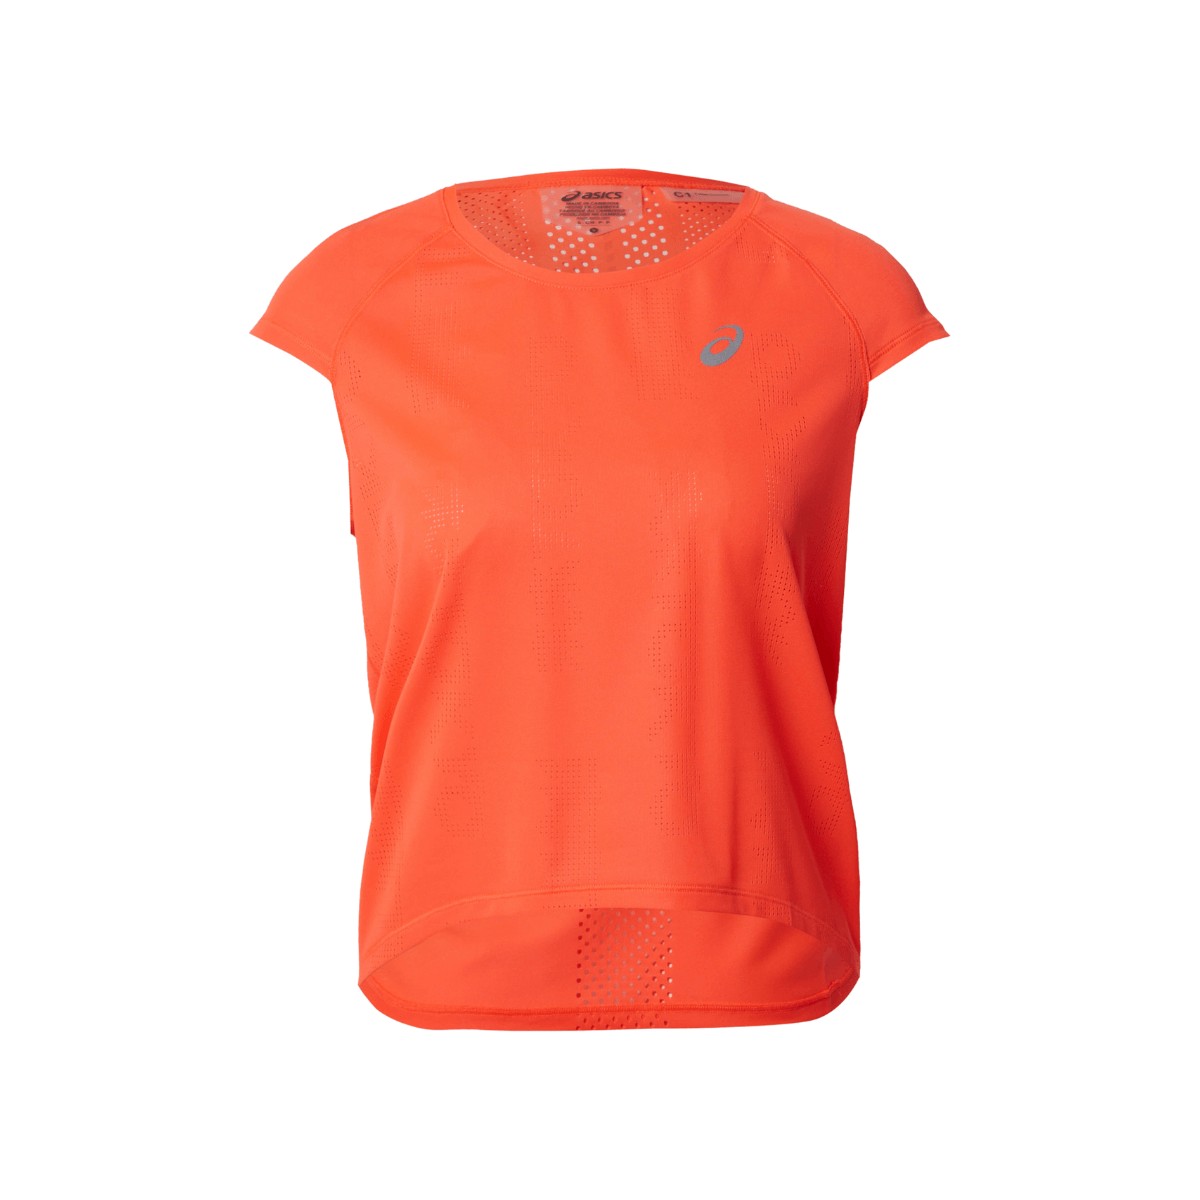 Asics Future Tokyo Ventilate Short Sleeve Orange Woman T-Shirt, Size XS